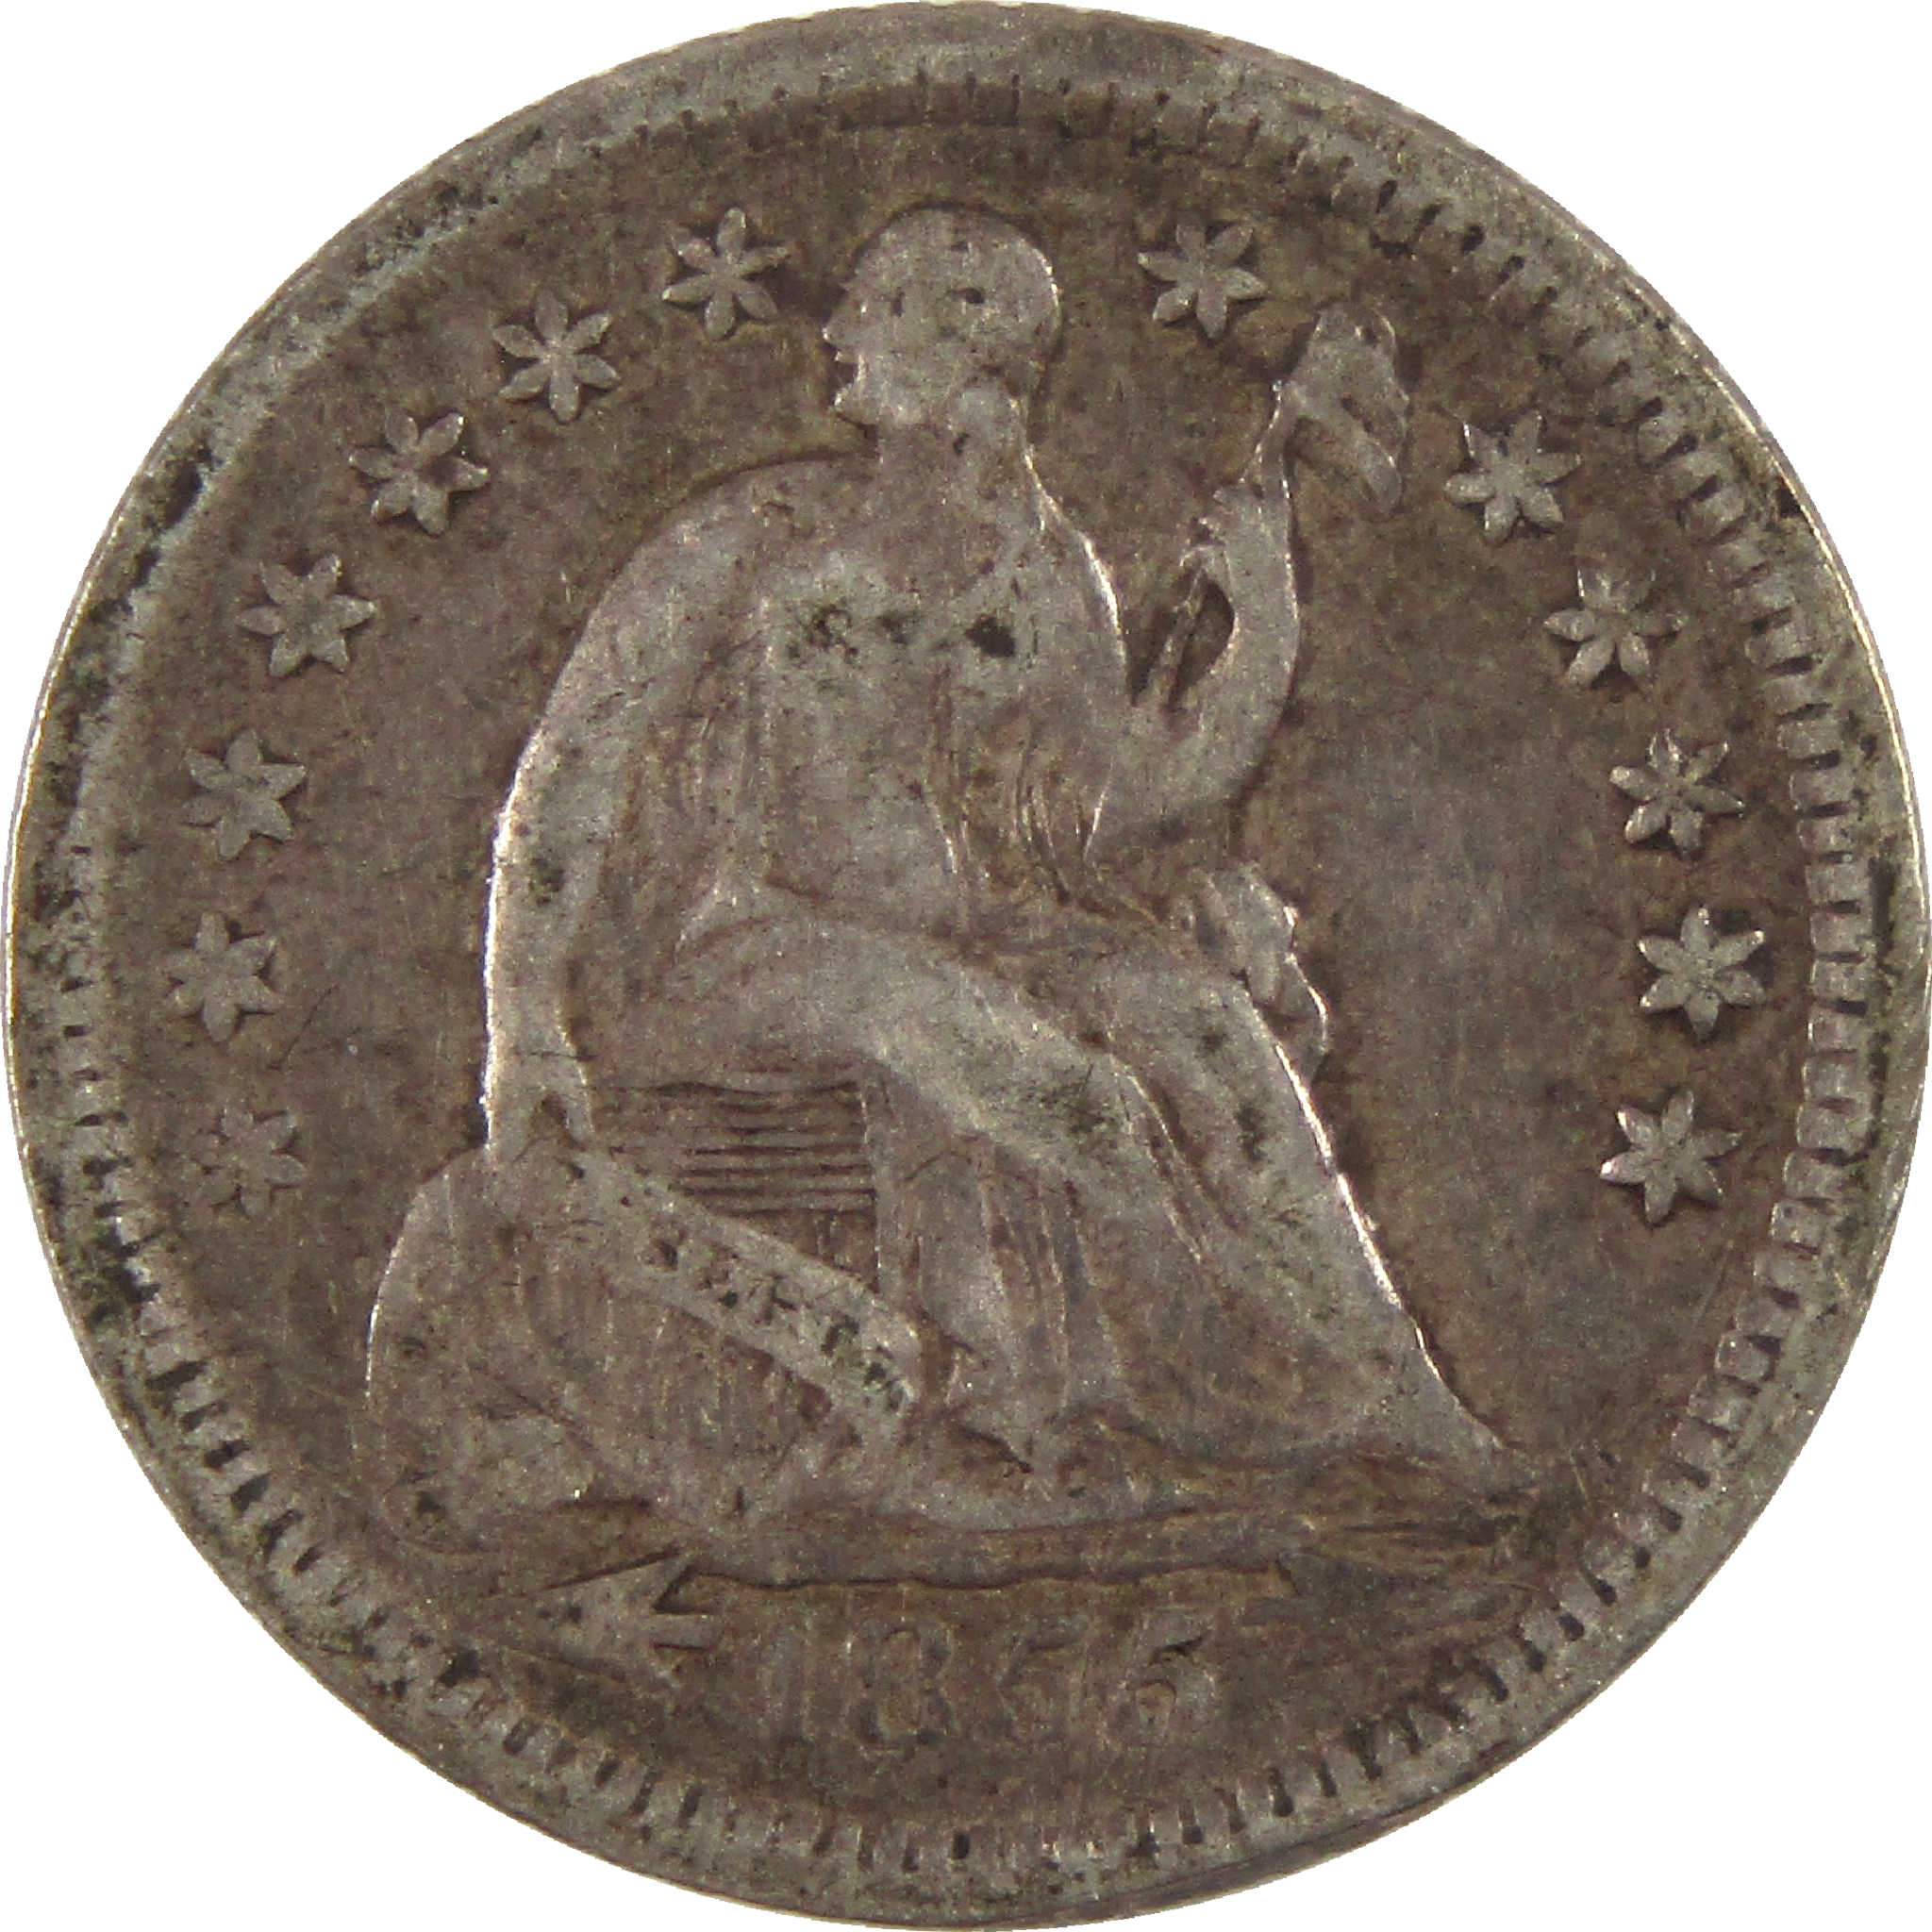 1855 O Seated Liberty Half Dime VF Very Fine Silver 5c Coin SKU:I11539